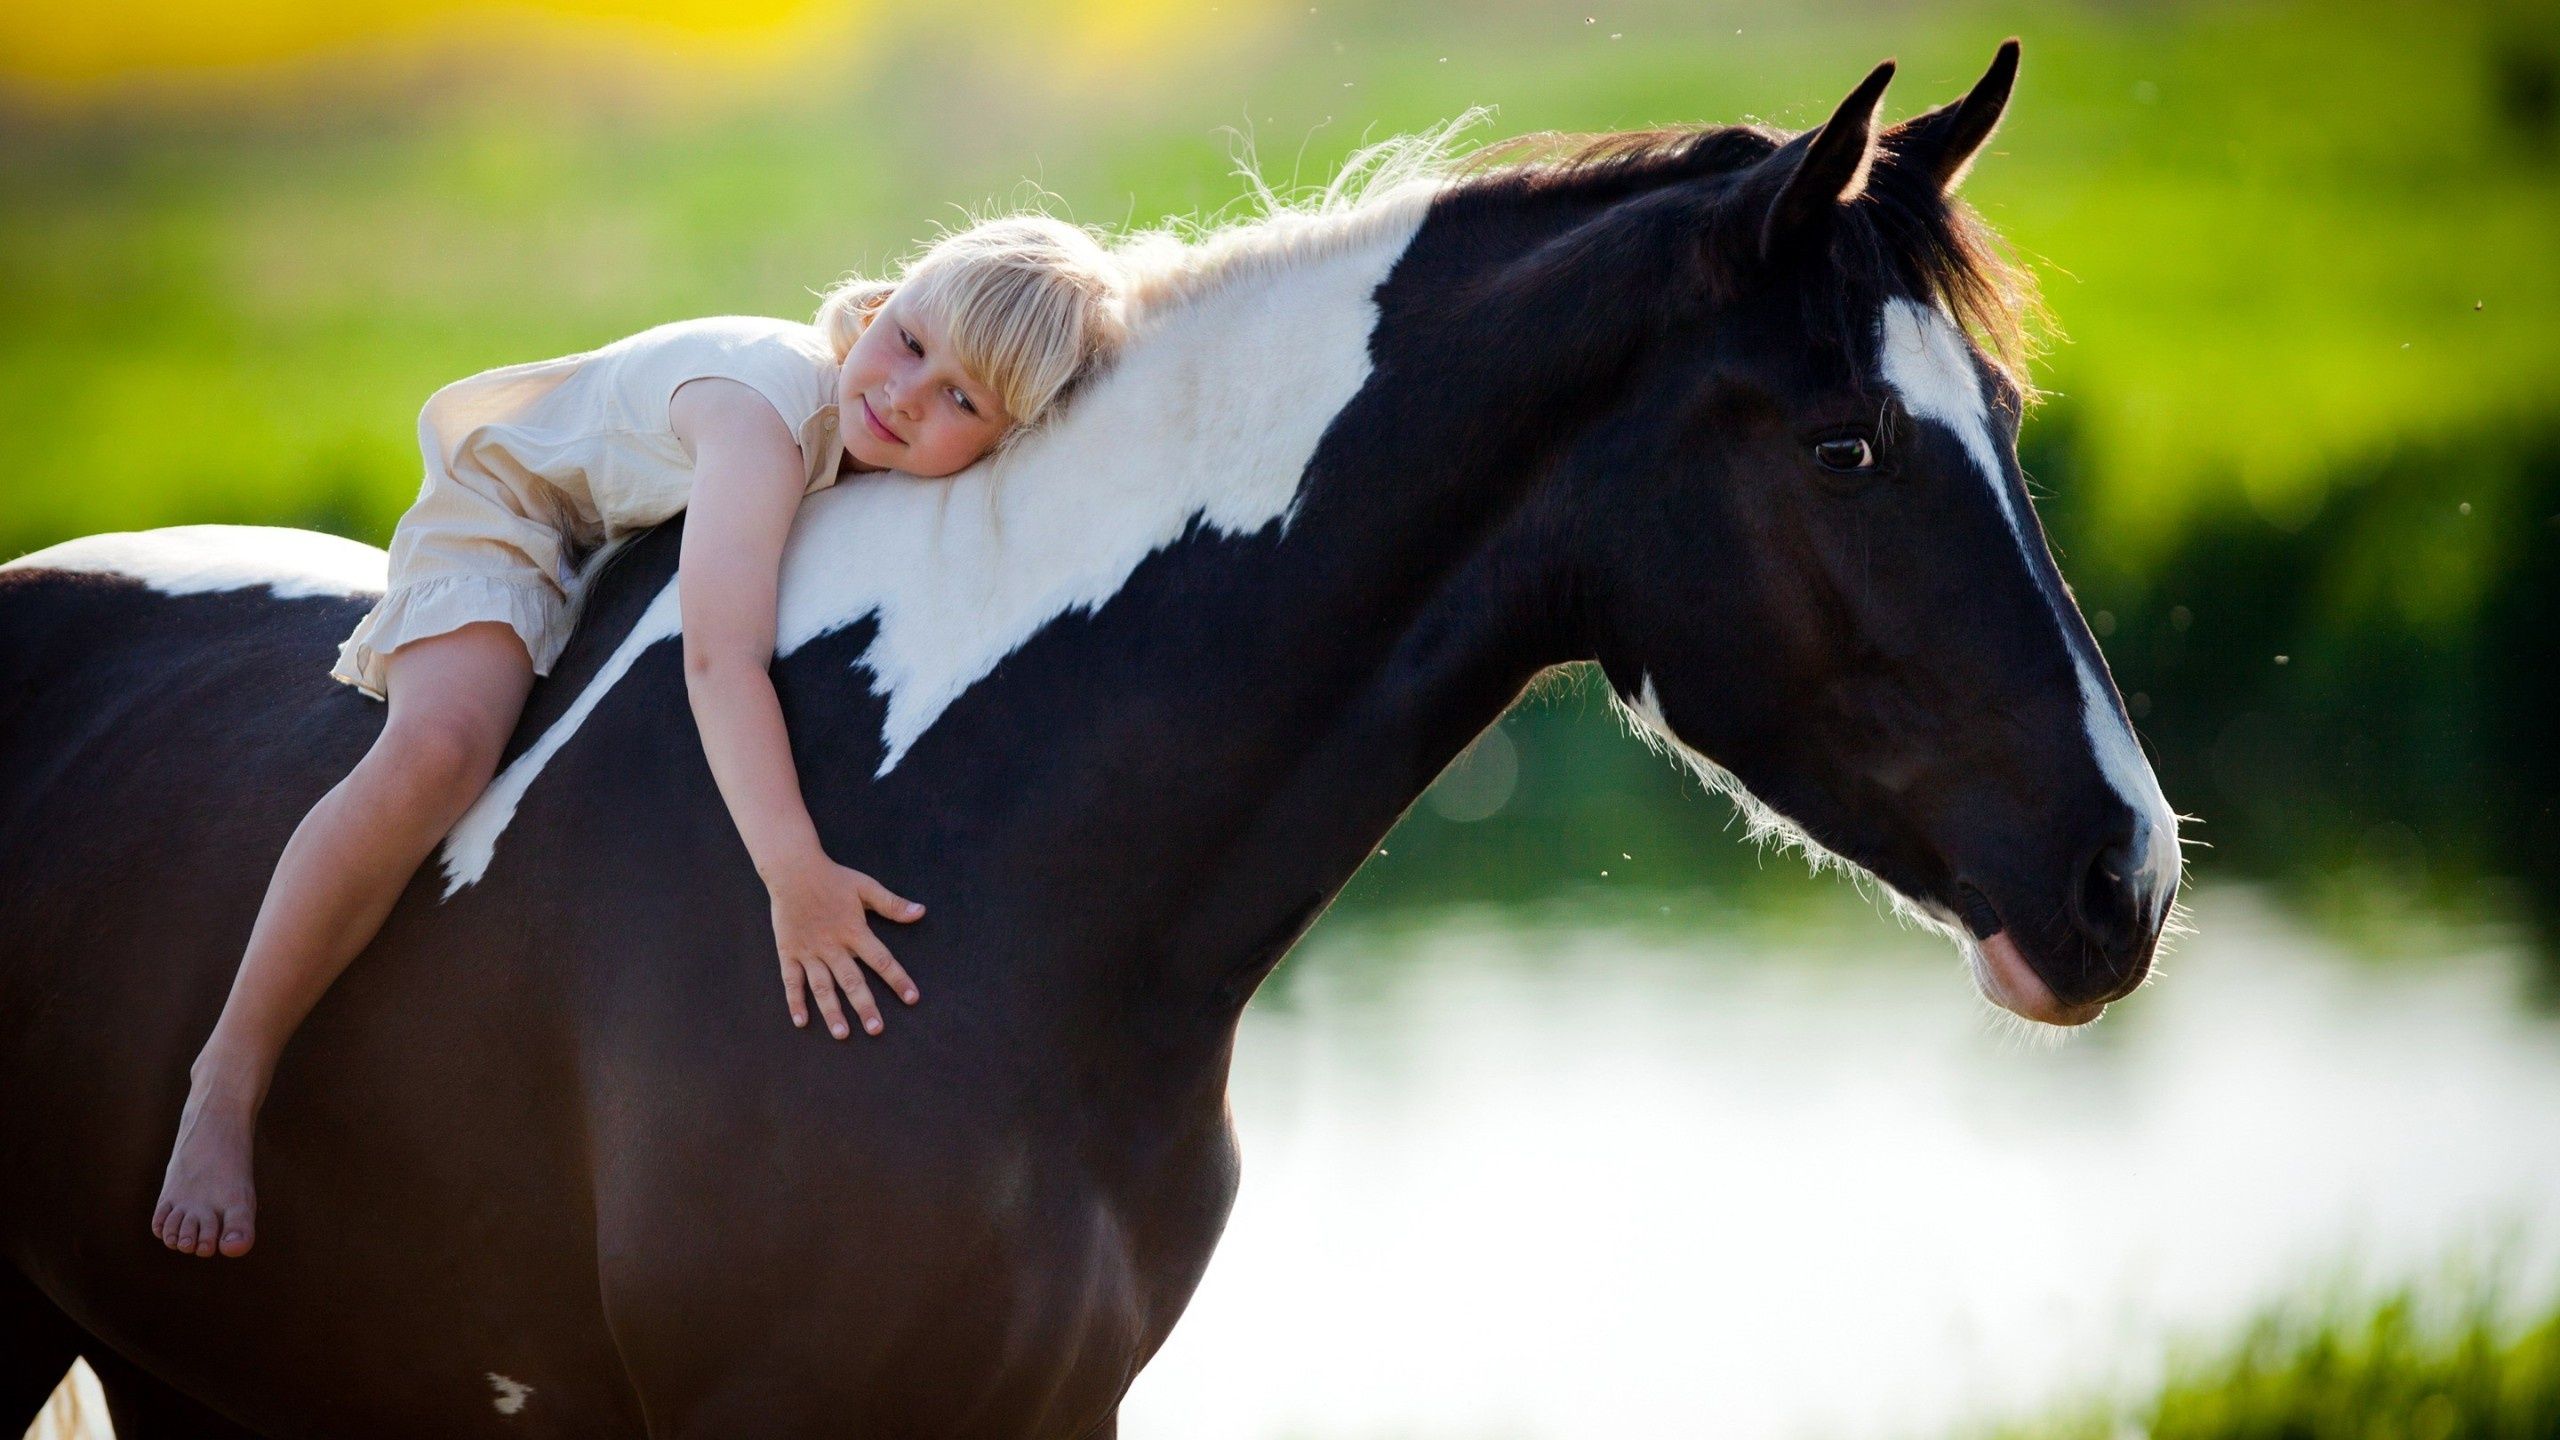 horse + child, Animals, Baby horses